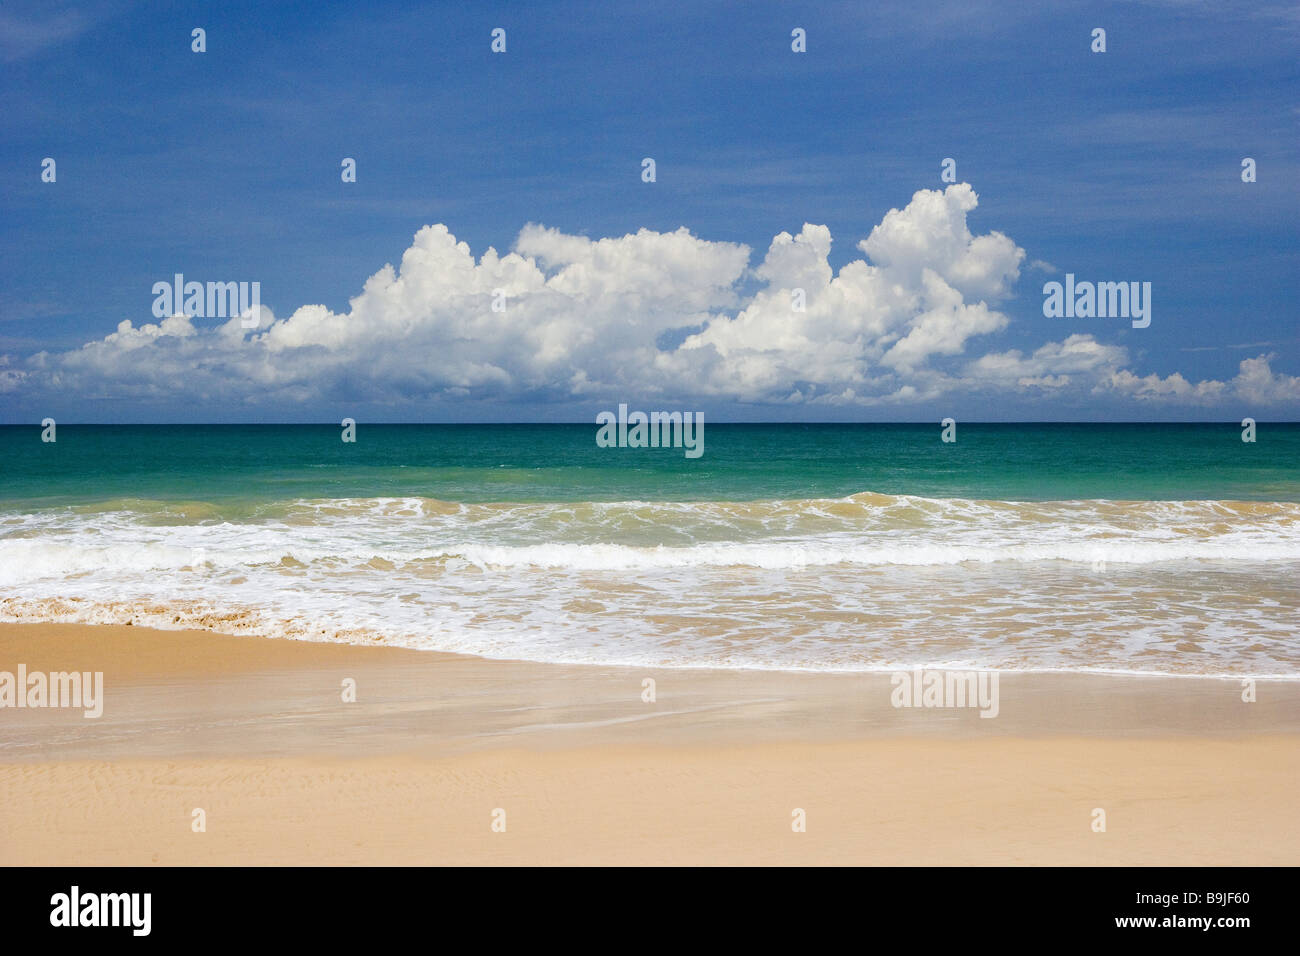 Sri Lanka-Südwestküste Sandstrand Meerblick Asien Südasien Strandsand See Surf Brandung Horizont weite Entfernung getrübt Stockfoto